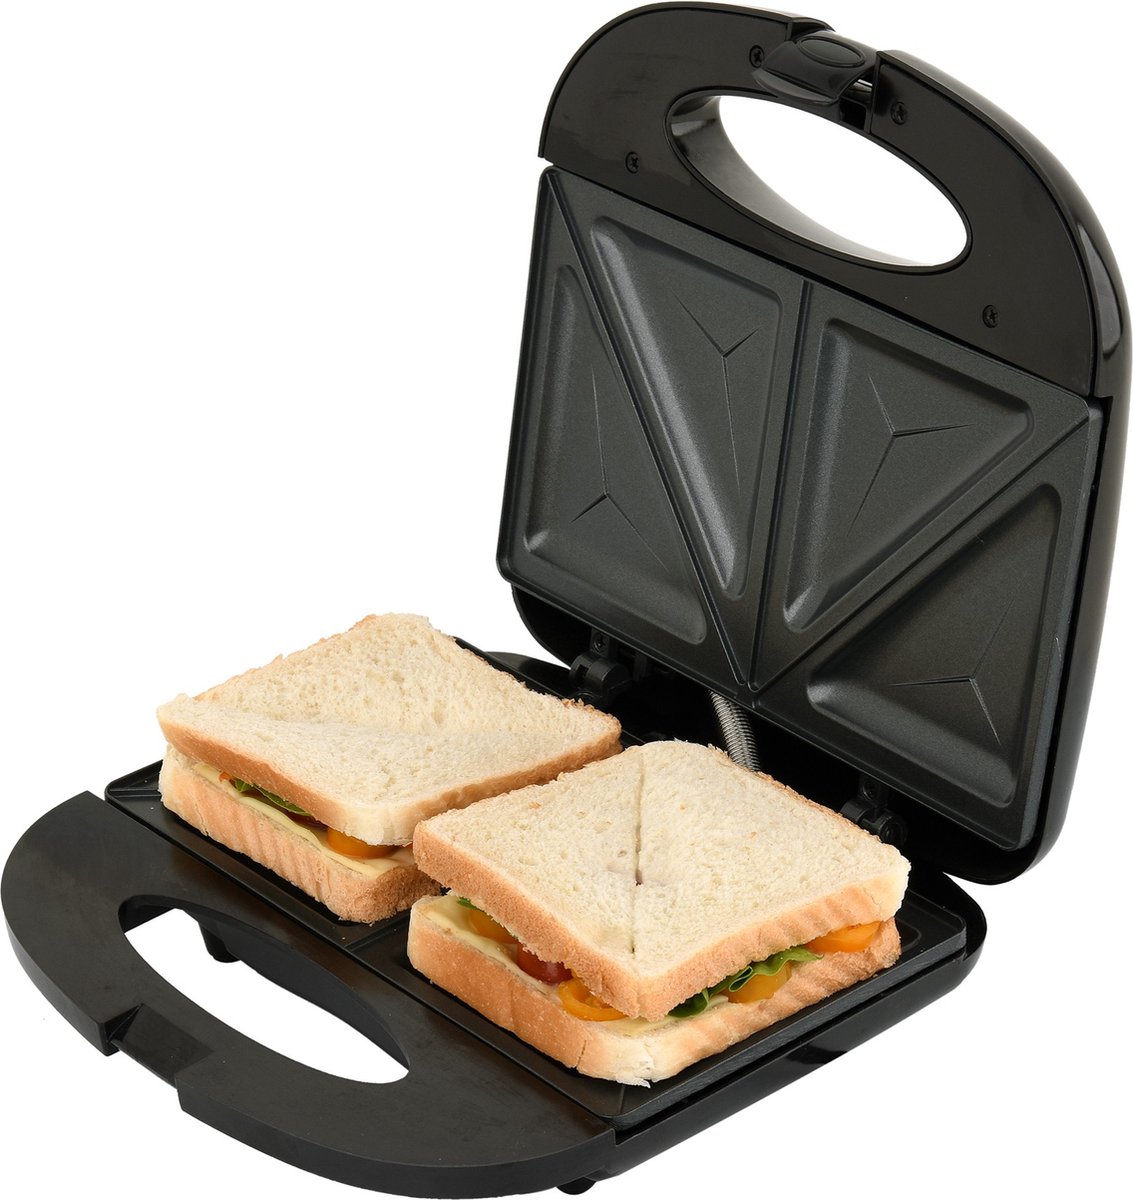 Lund professional sandwich maker tosti ijzer tosti apparaat klassiek model voor 2 tosti's 750W zwart zilver